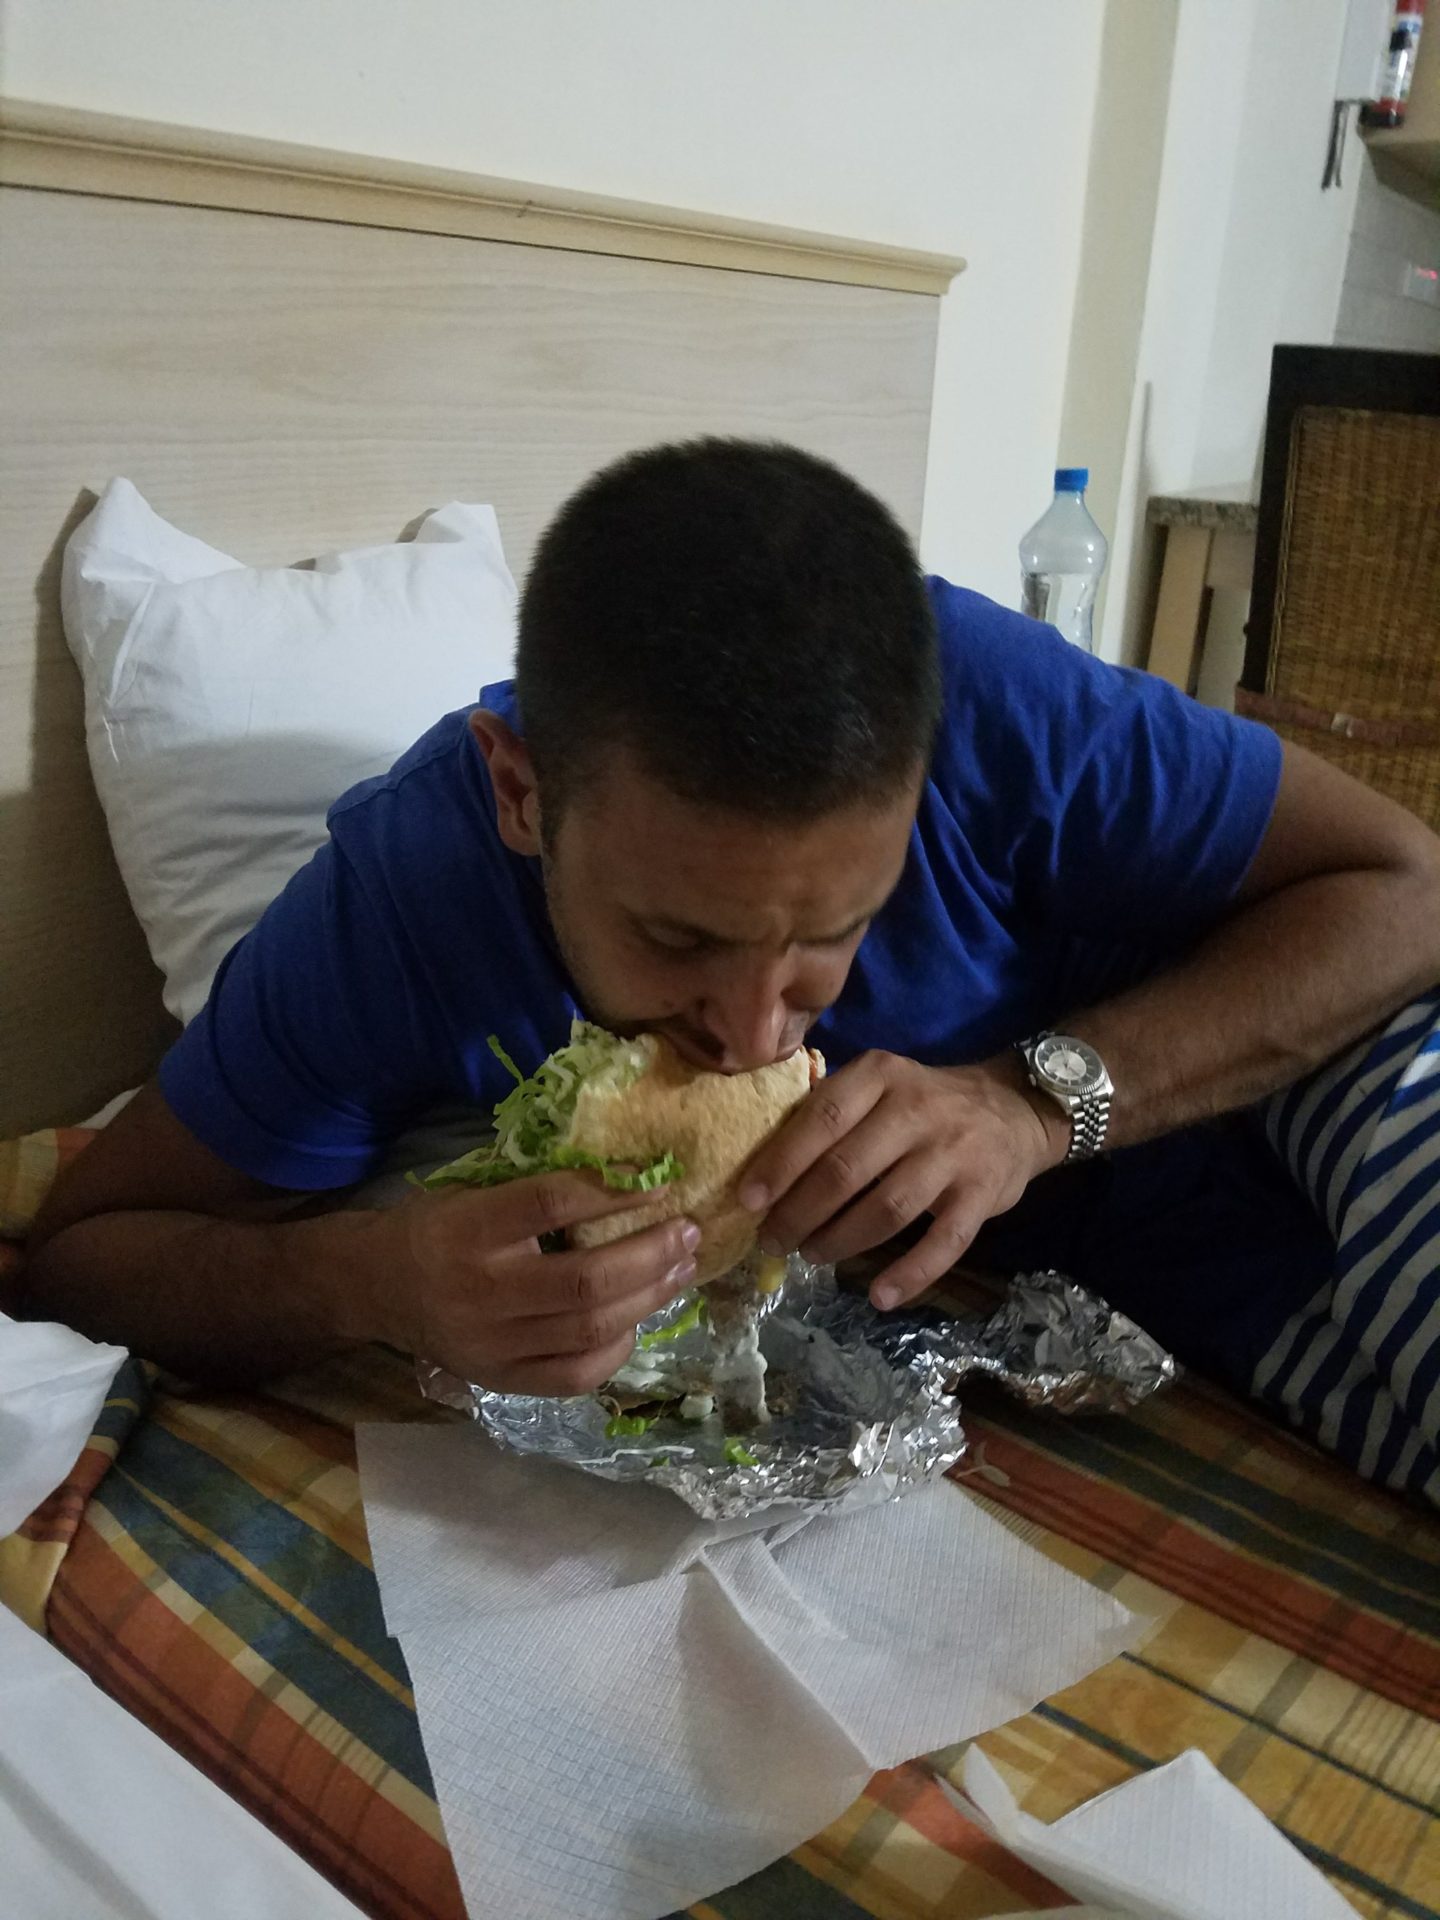 a man eating a sandwich